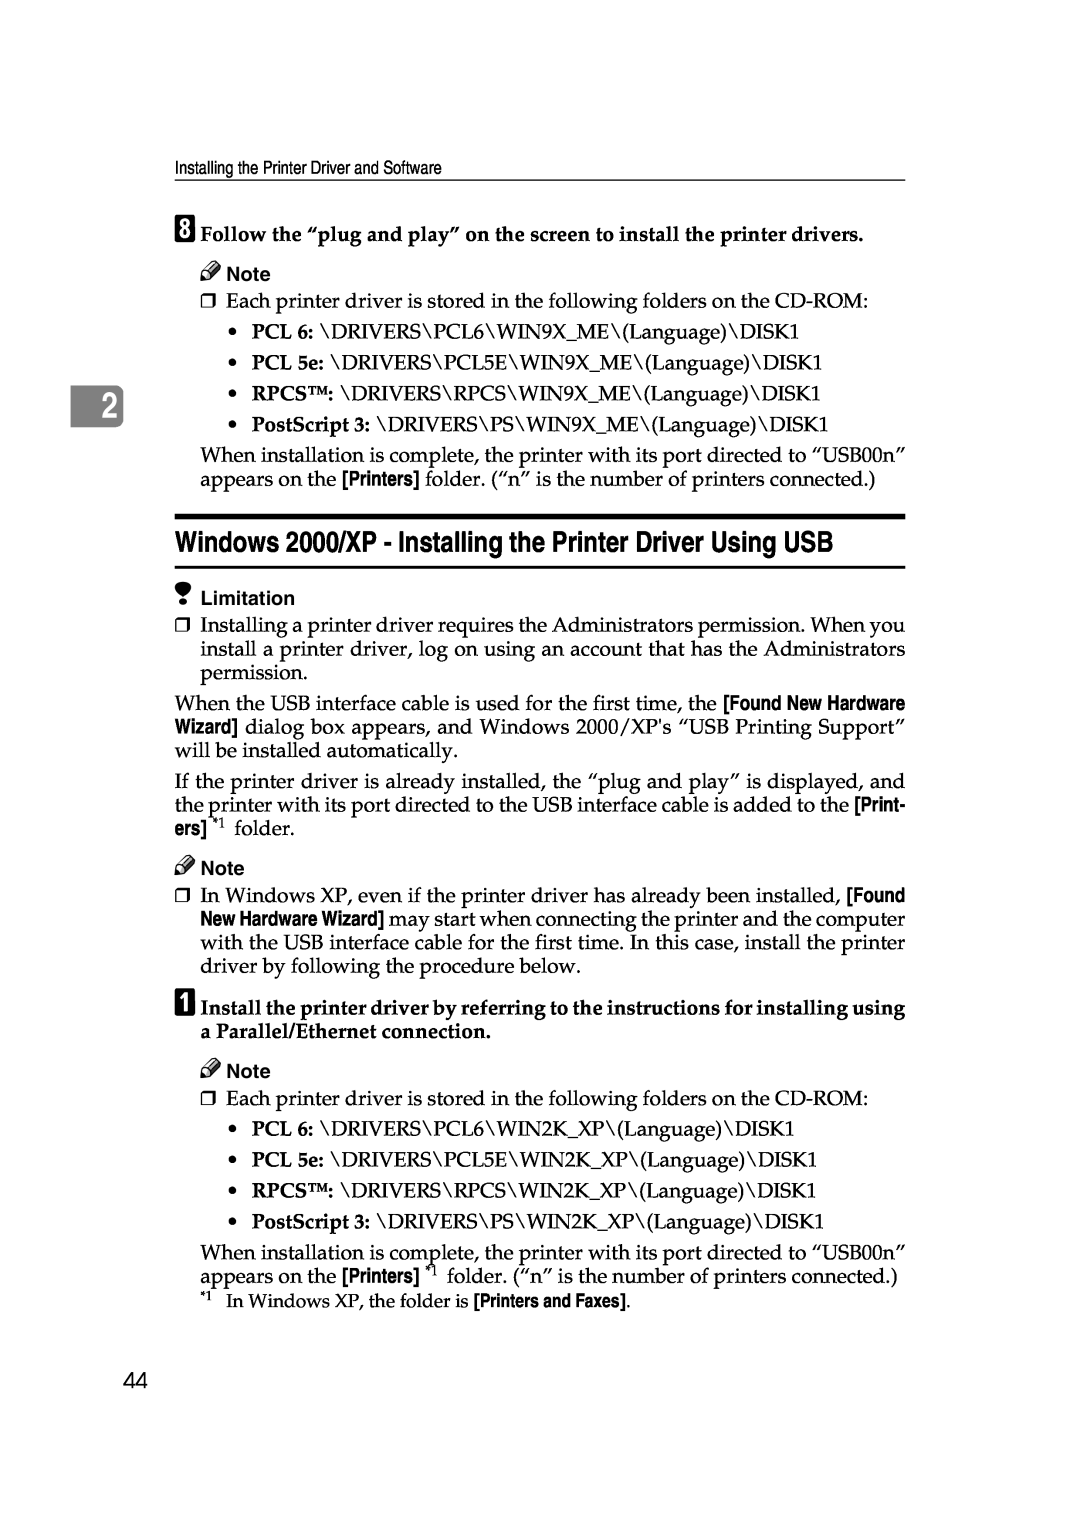 Xerox 1075 manual Windows 2000/XP - Installing the Printer Driver Using USB, Limitation 